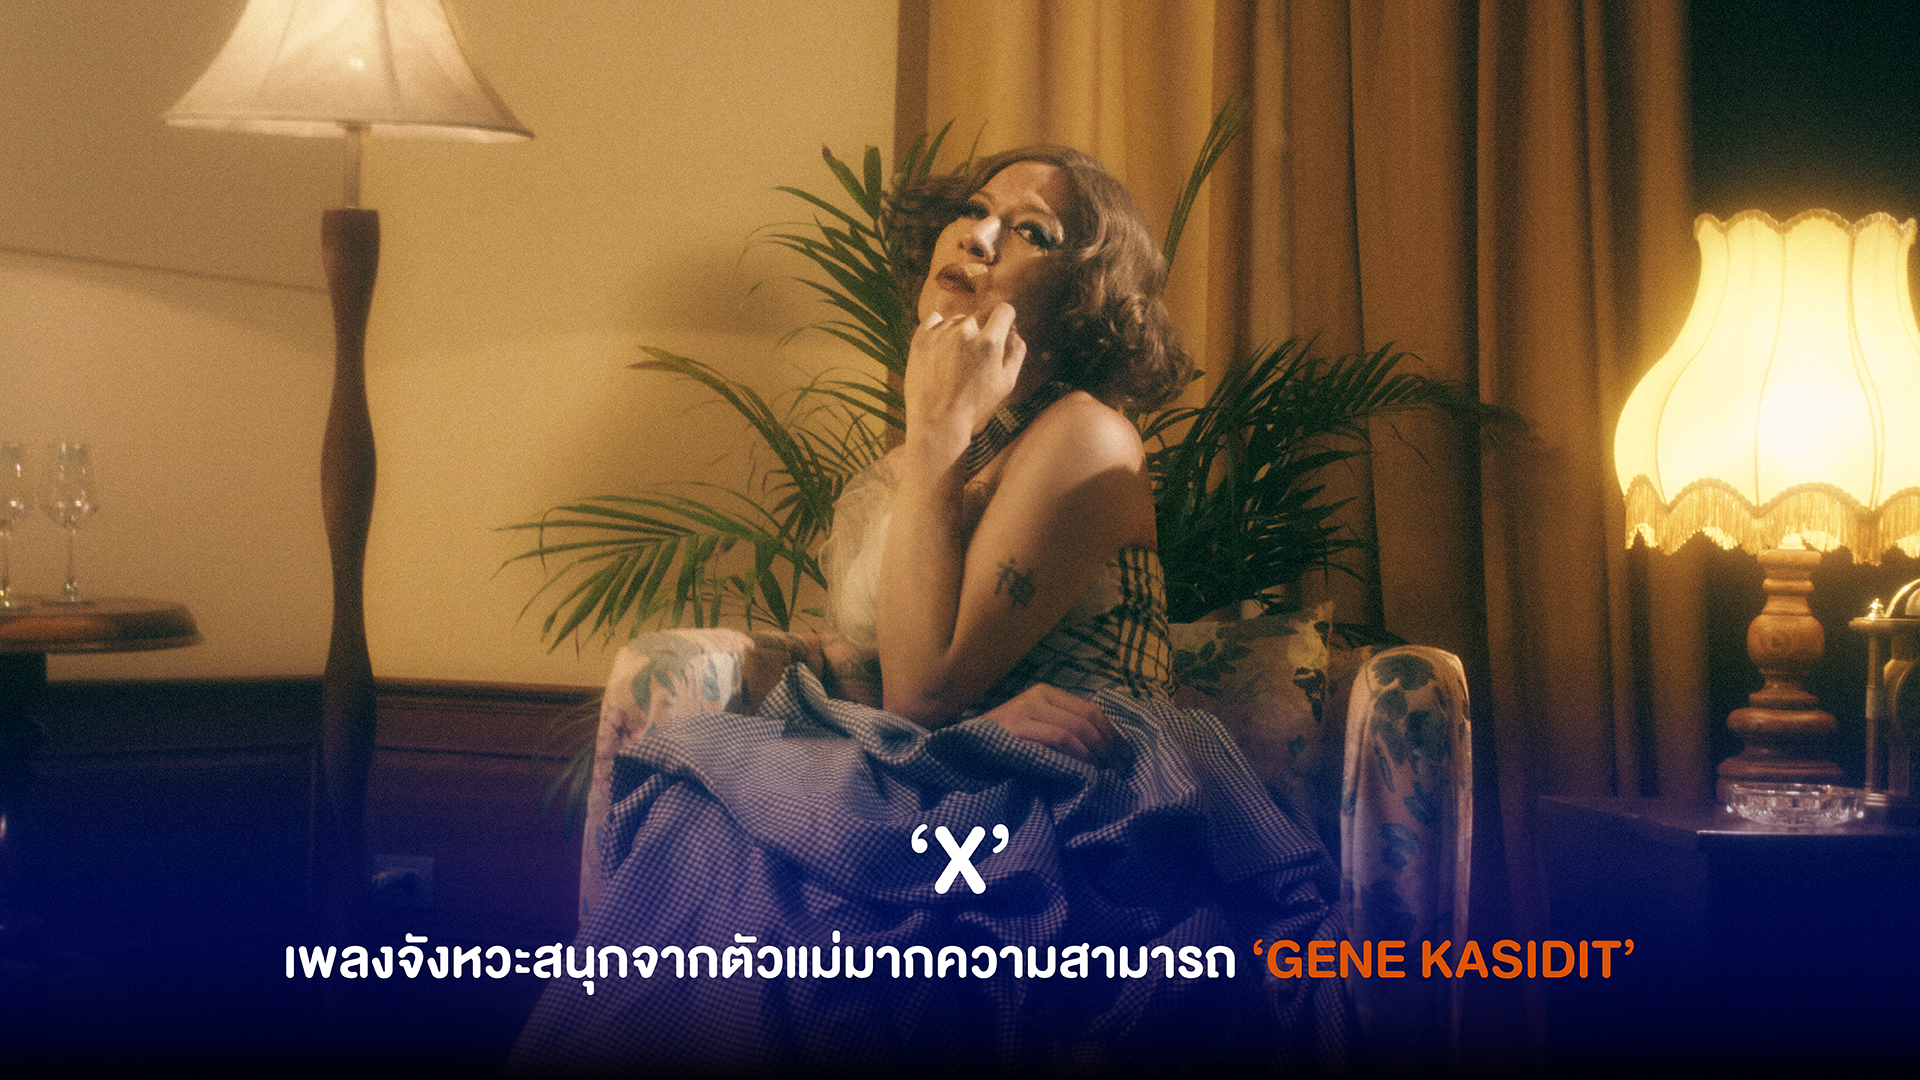 GENE KASIDIT ตัวแม่มากความสามารถแห่งค่าย Smallroom ปล่อยเพลงจังหวะสนุก ‘X’ ที่มาพร้อมแนวดนตรี Electronic Pop